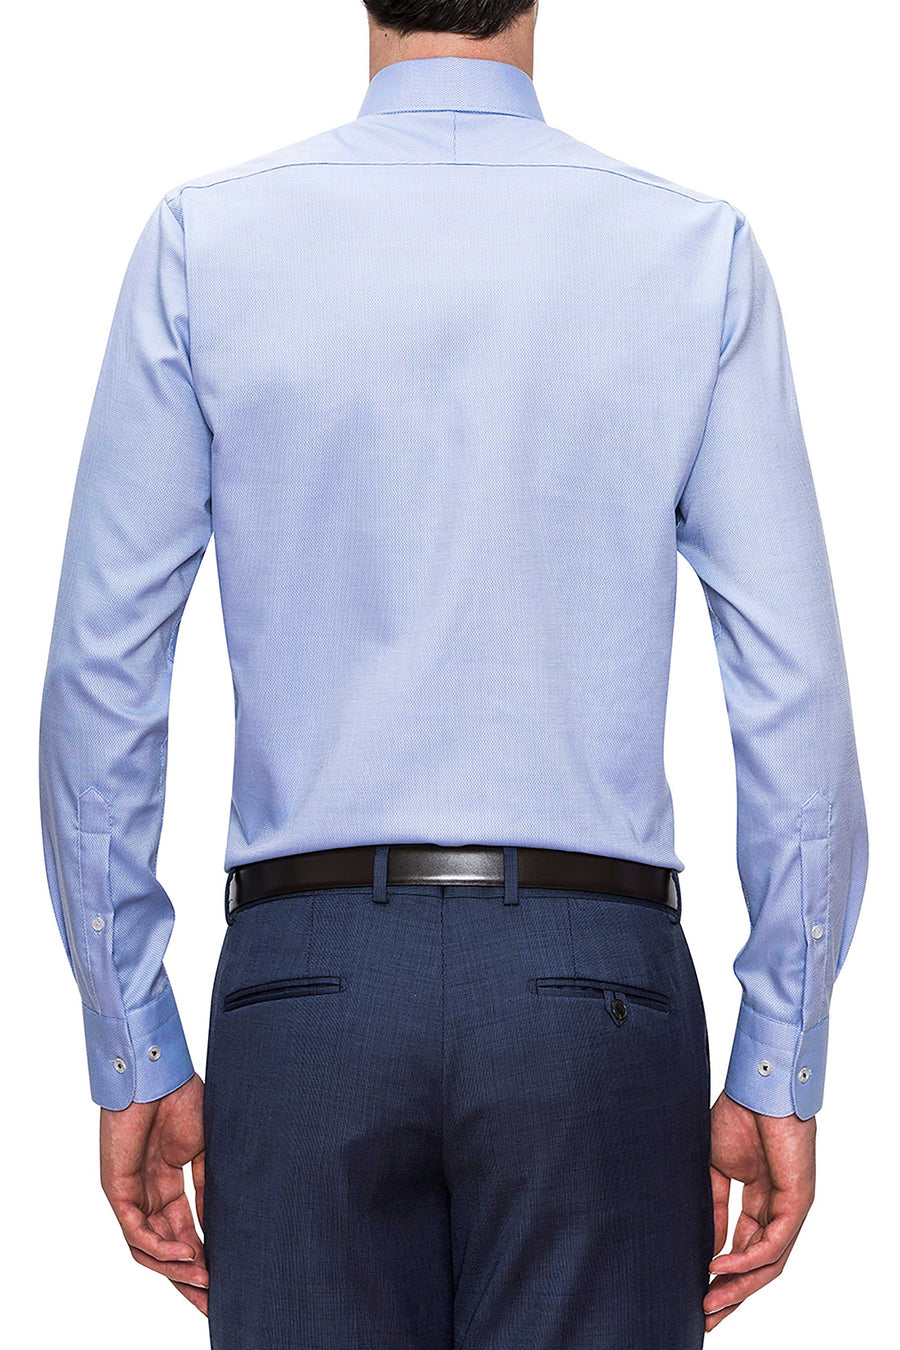 Joe Black Pioneer L/S Shirt | Blue Texture